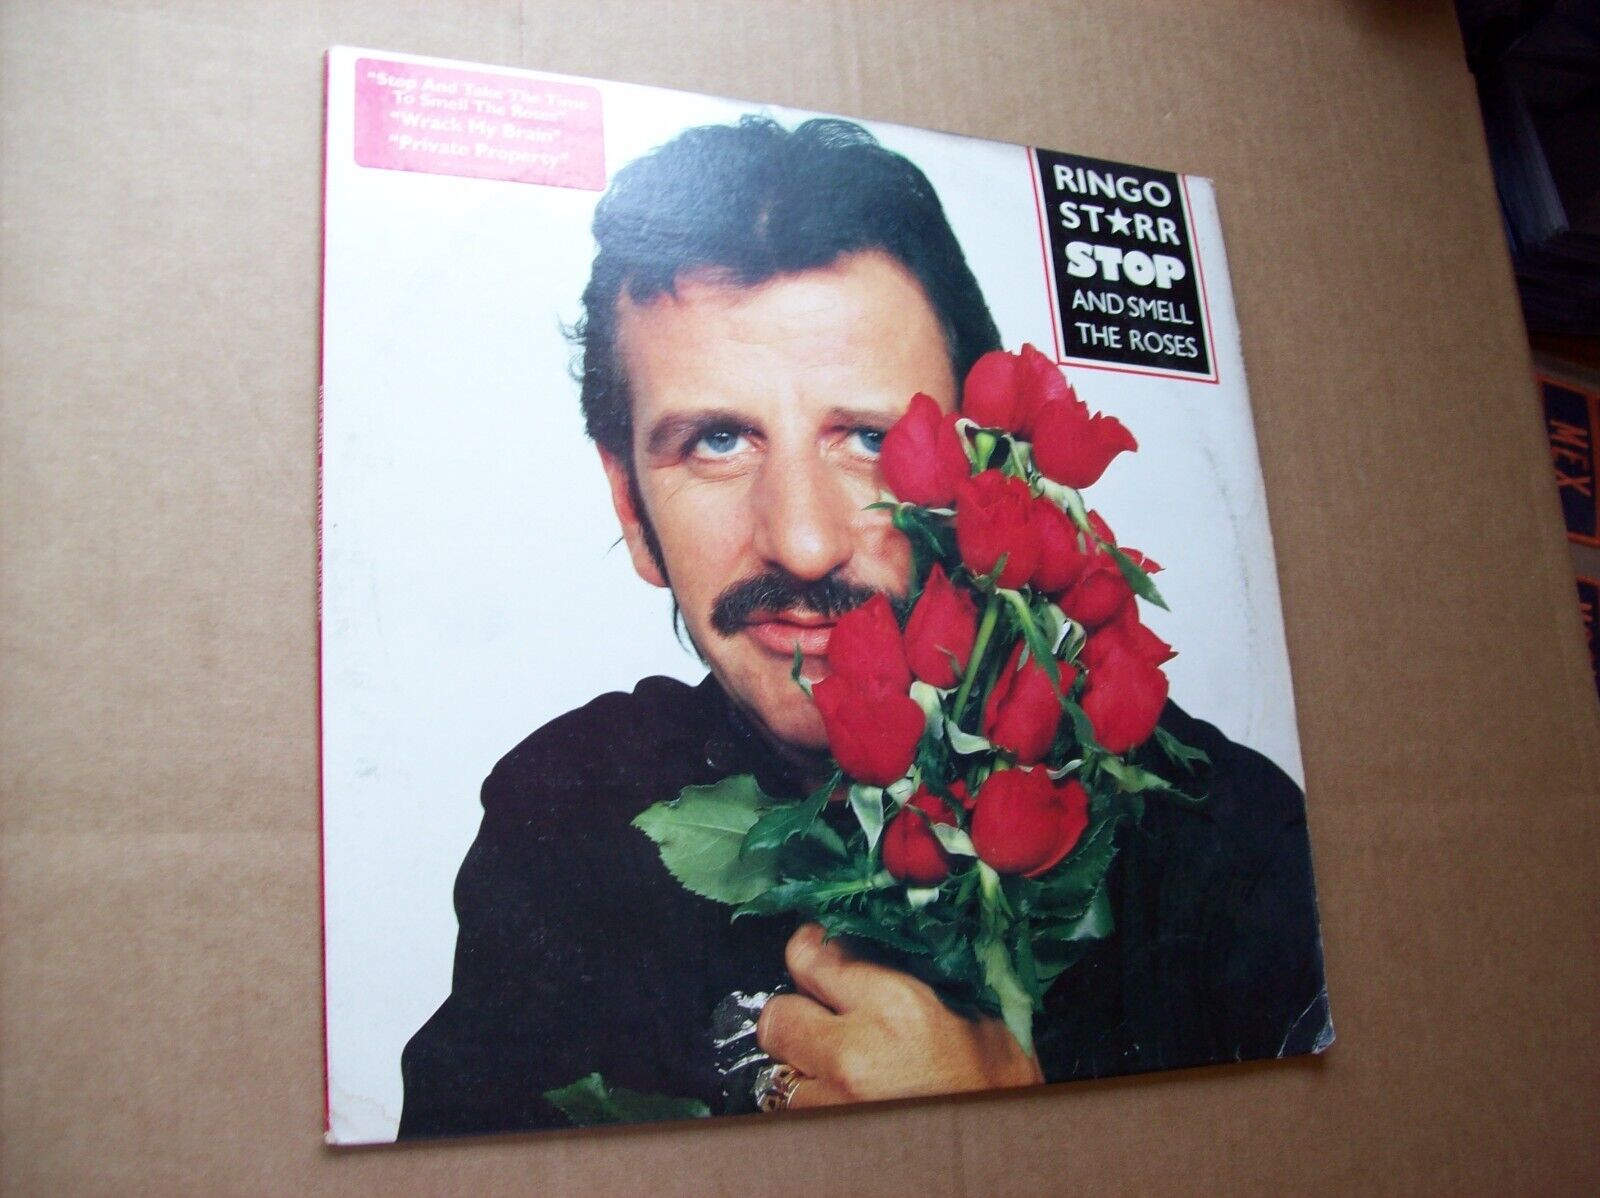 Ringo Starr stop & smell the roses vinyl LP record 1981 Boardwalk Entertainment